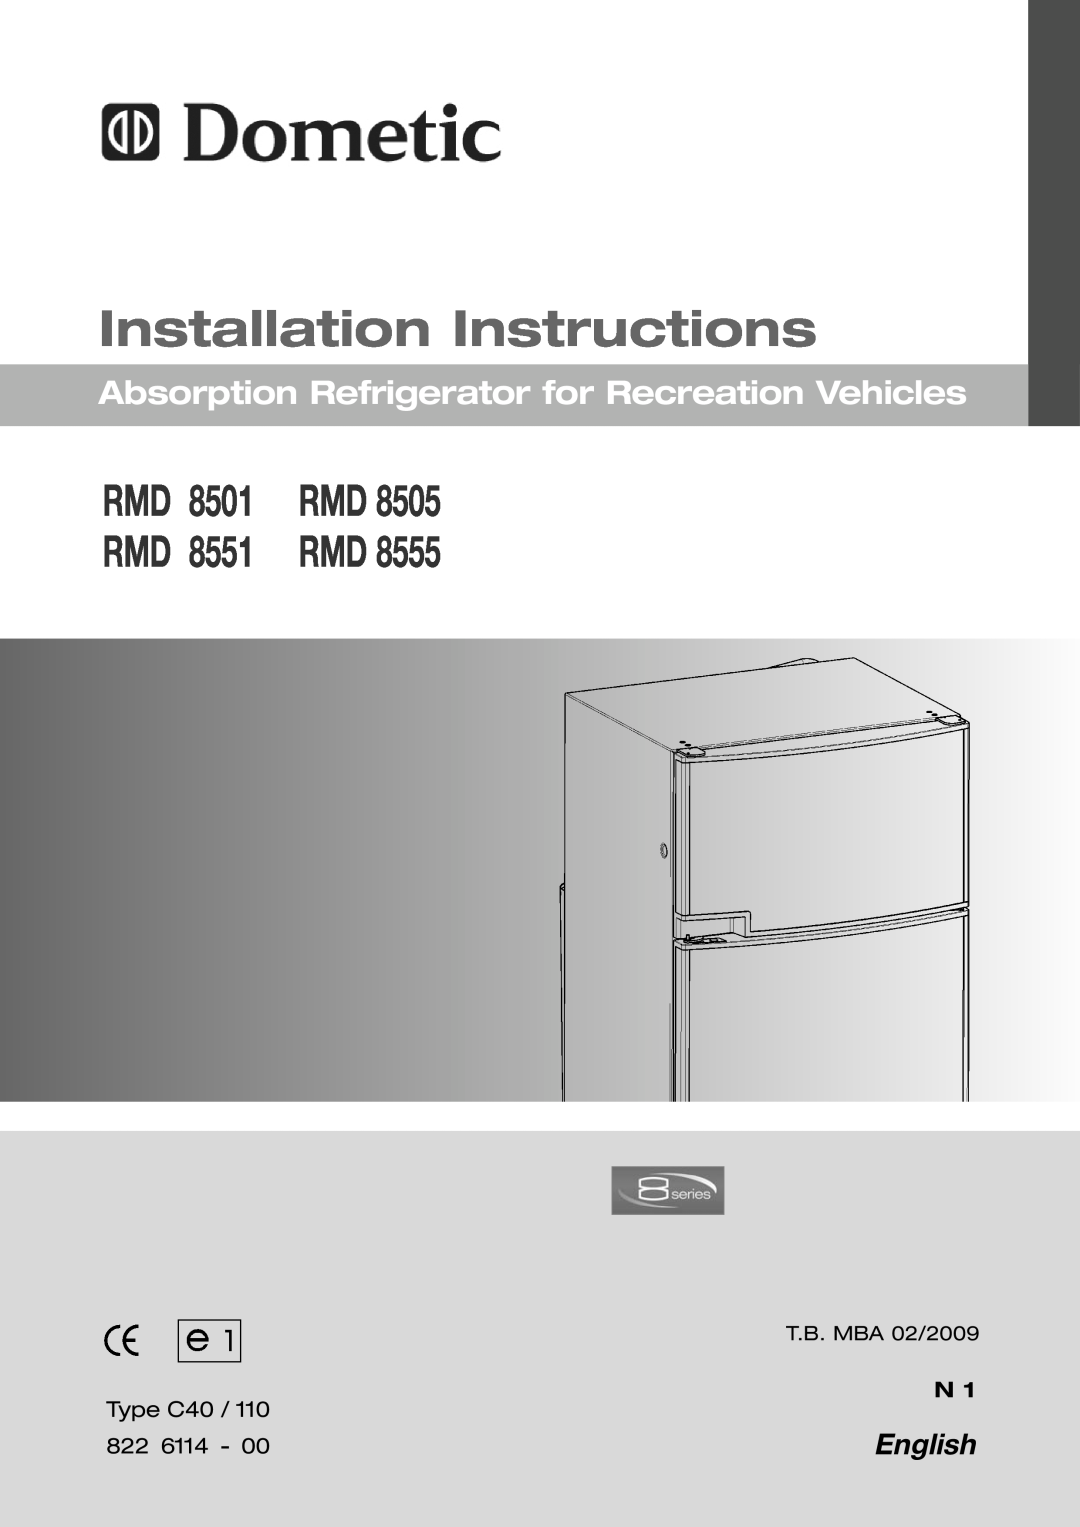 Dometic RMD 8501, RMD 8505, RMD 8551 installation instructions Type C40, 822, Installation Instructions, English 